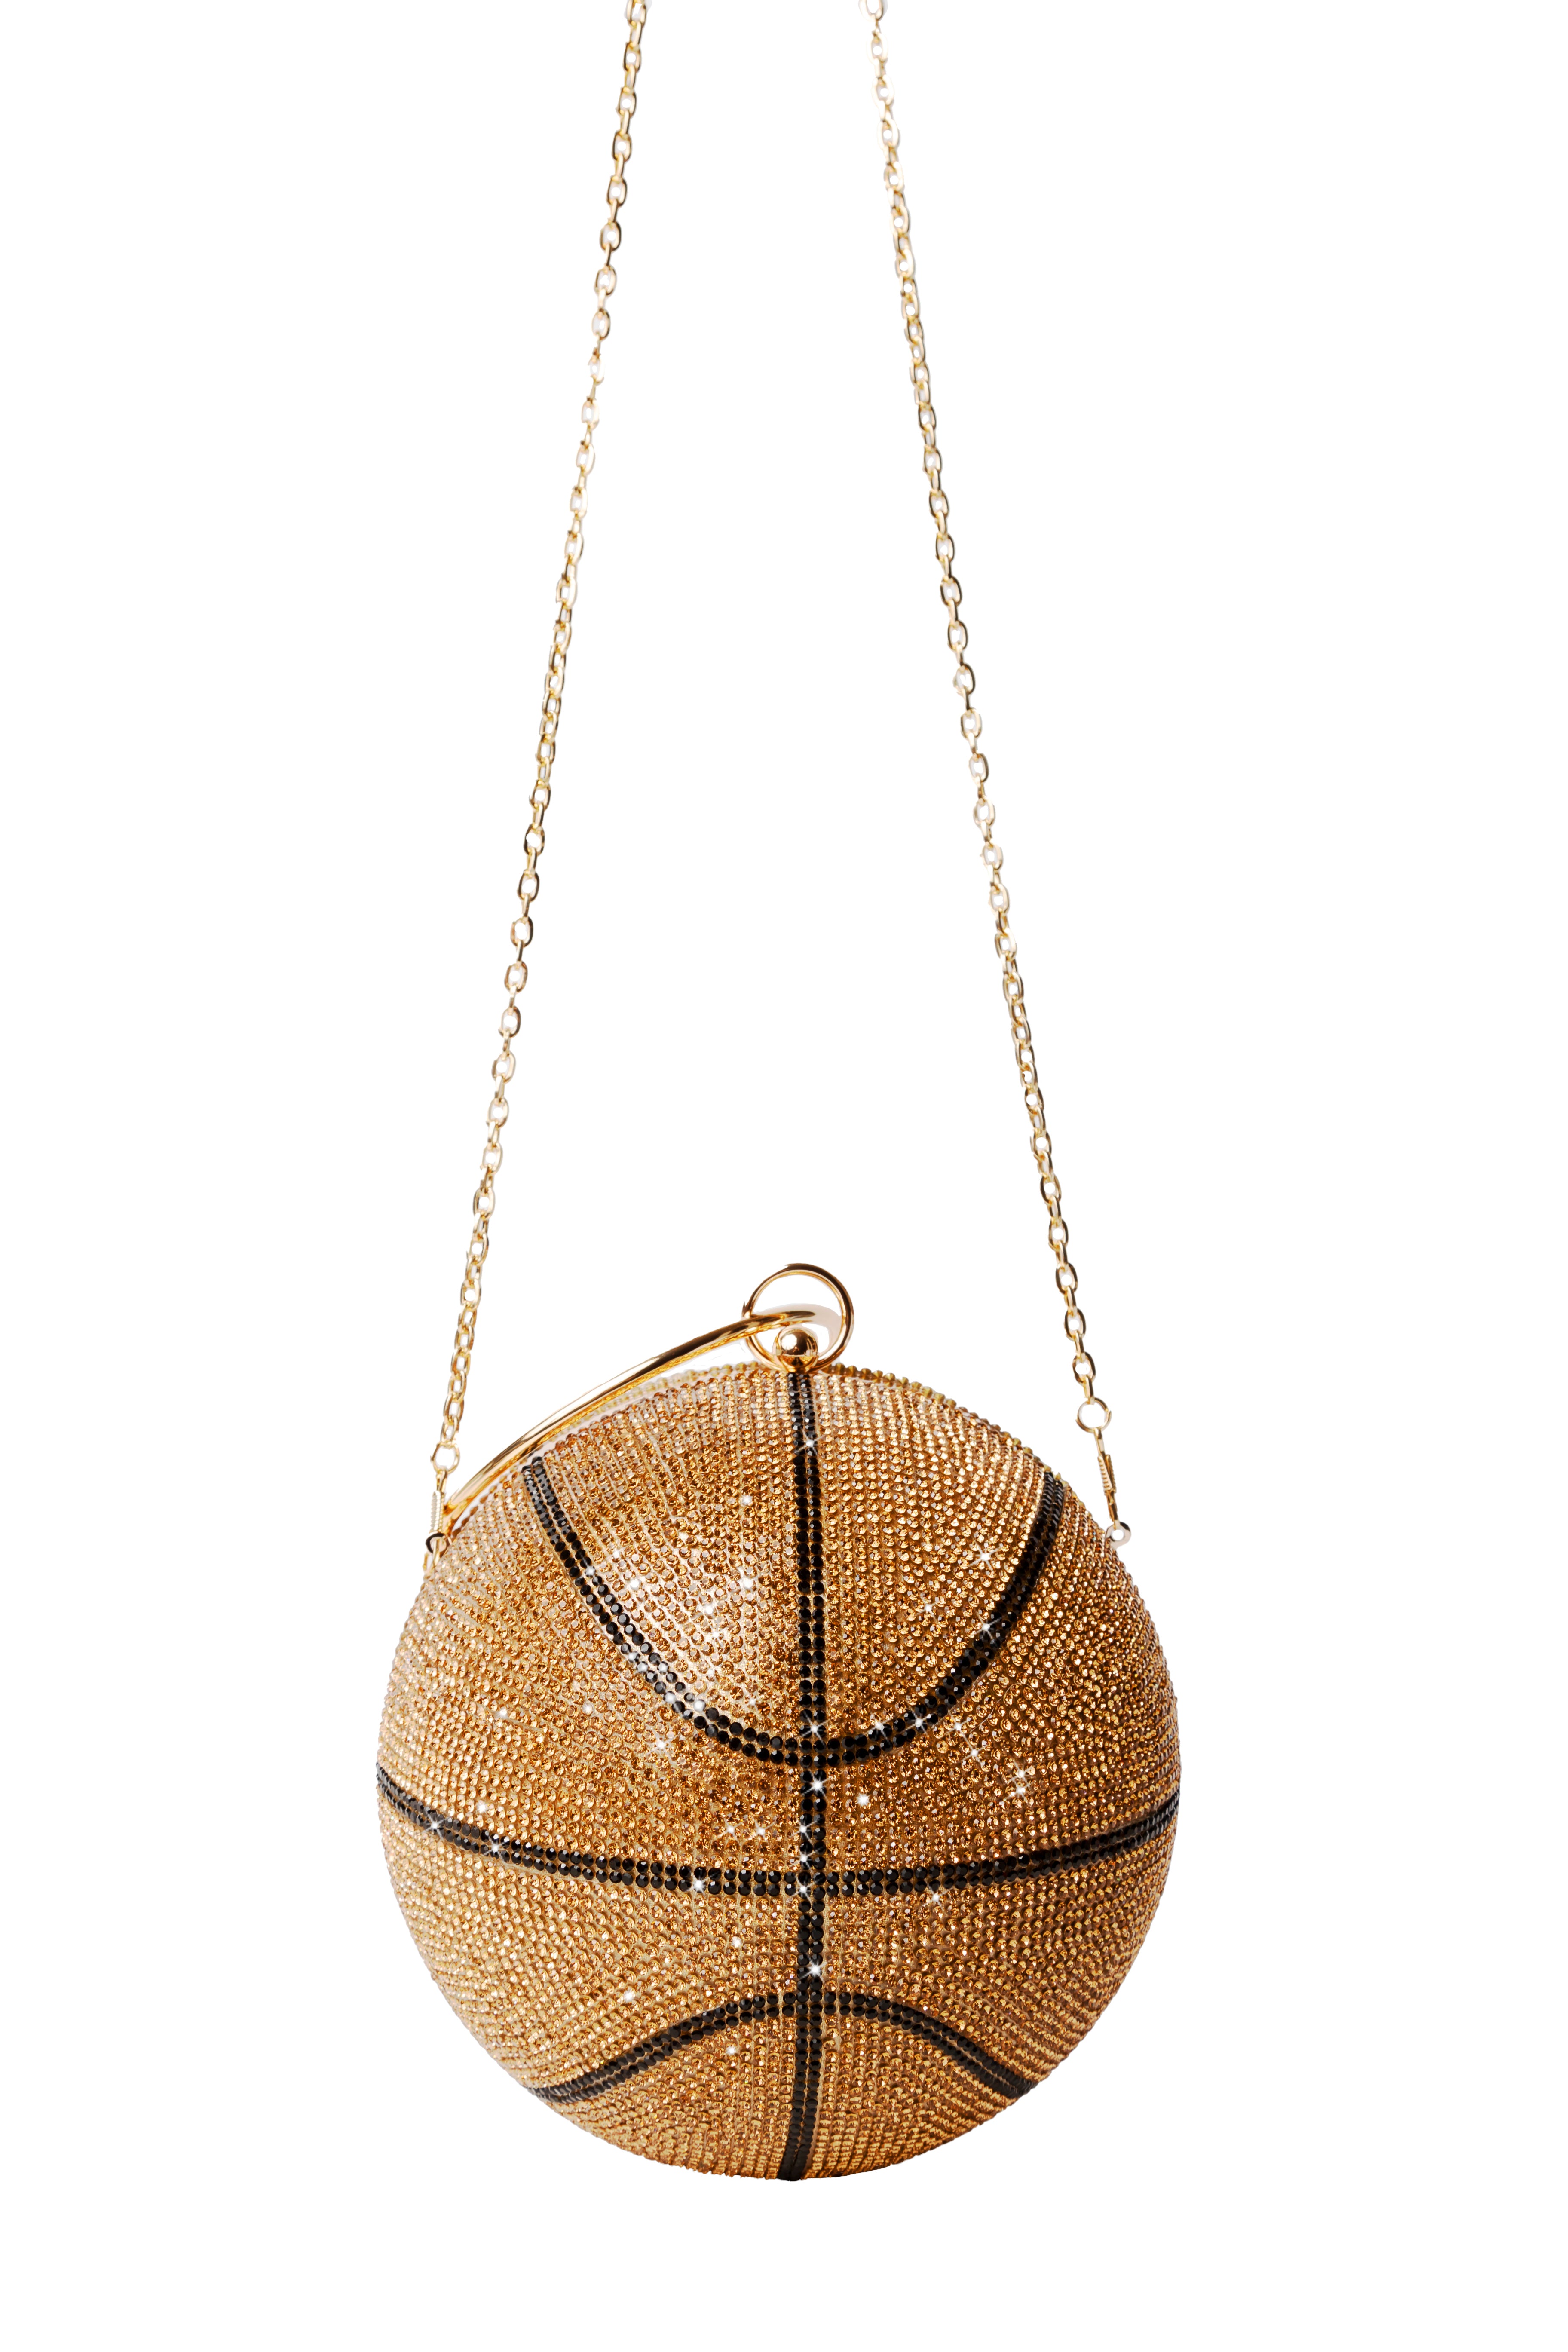 Women's Basketball Handbag | Women's Basketball Bag | Basketball Bag Women  - Luxury - Aliexpress